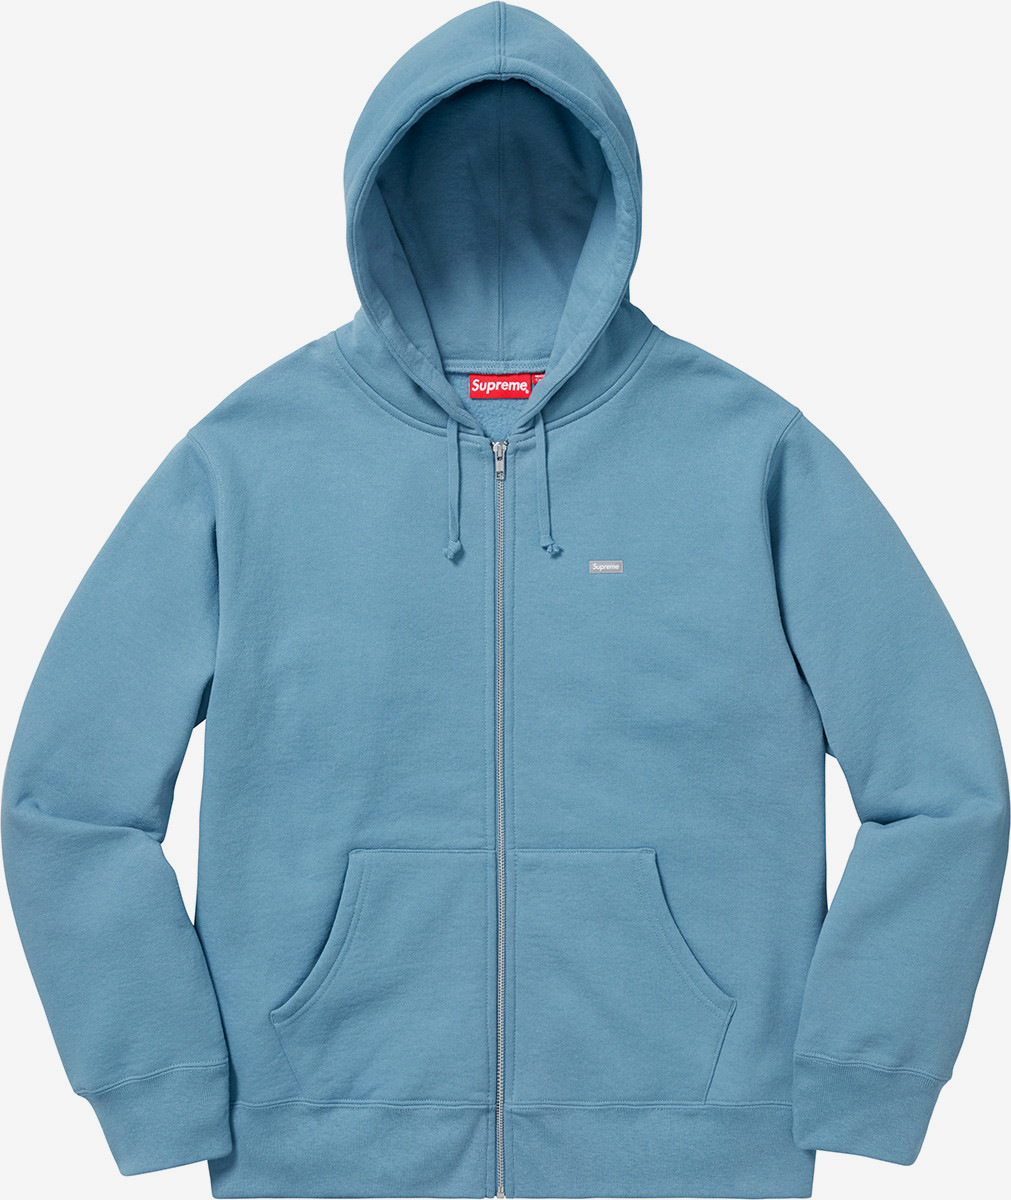 supreme-drop-list-reflective-small-box-zip-up-sweatshirt-1011x1200.jpg